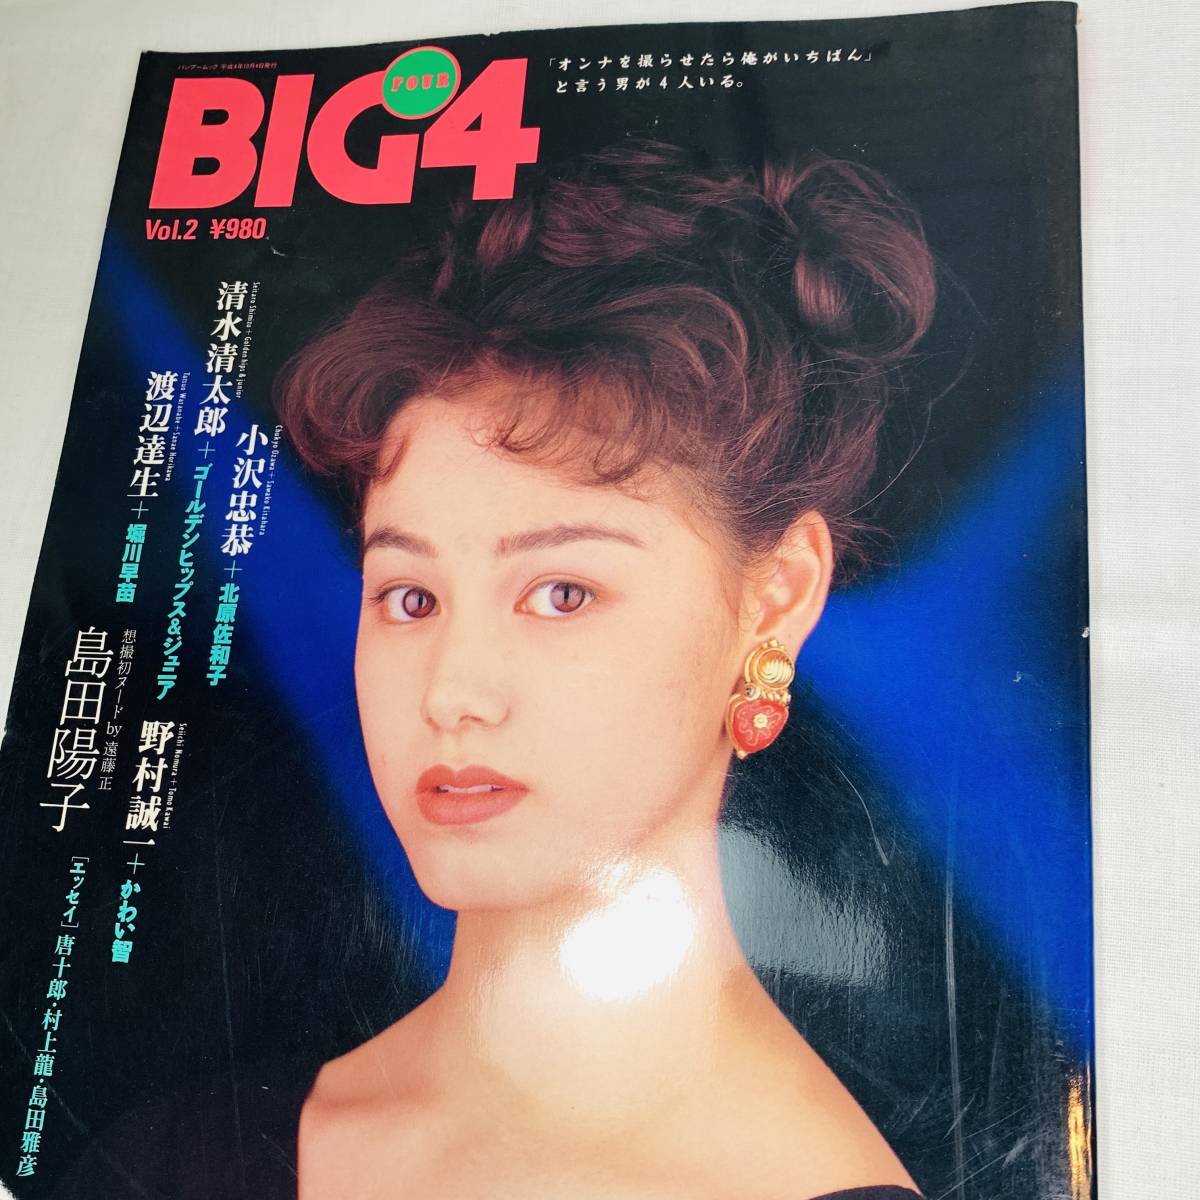 竹書房 BIG4 Vol.2 雑誌 平成4年10月4日発行 USED品 1円スタート _画像6